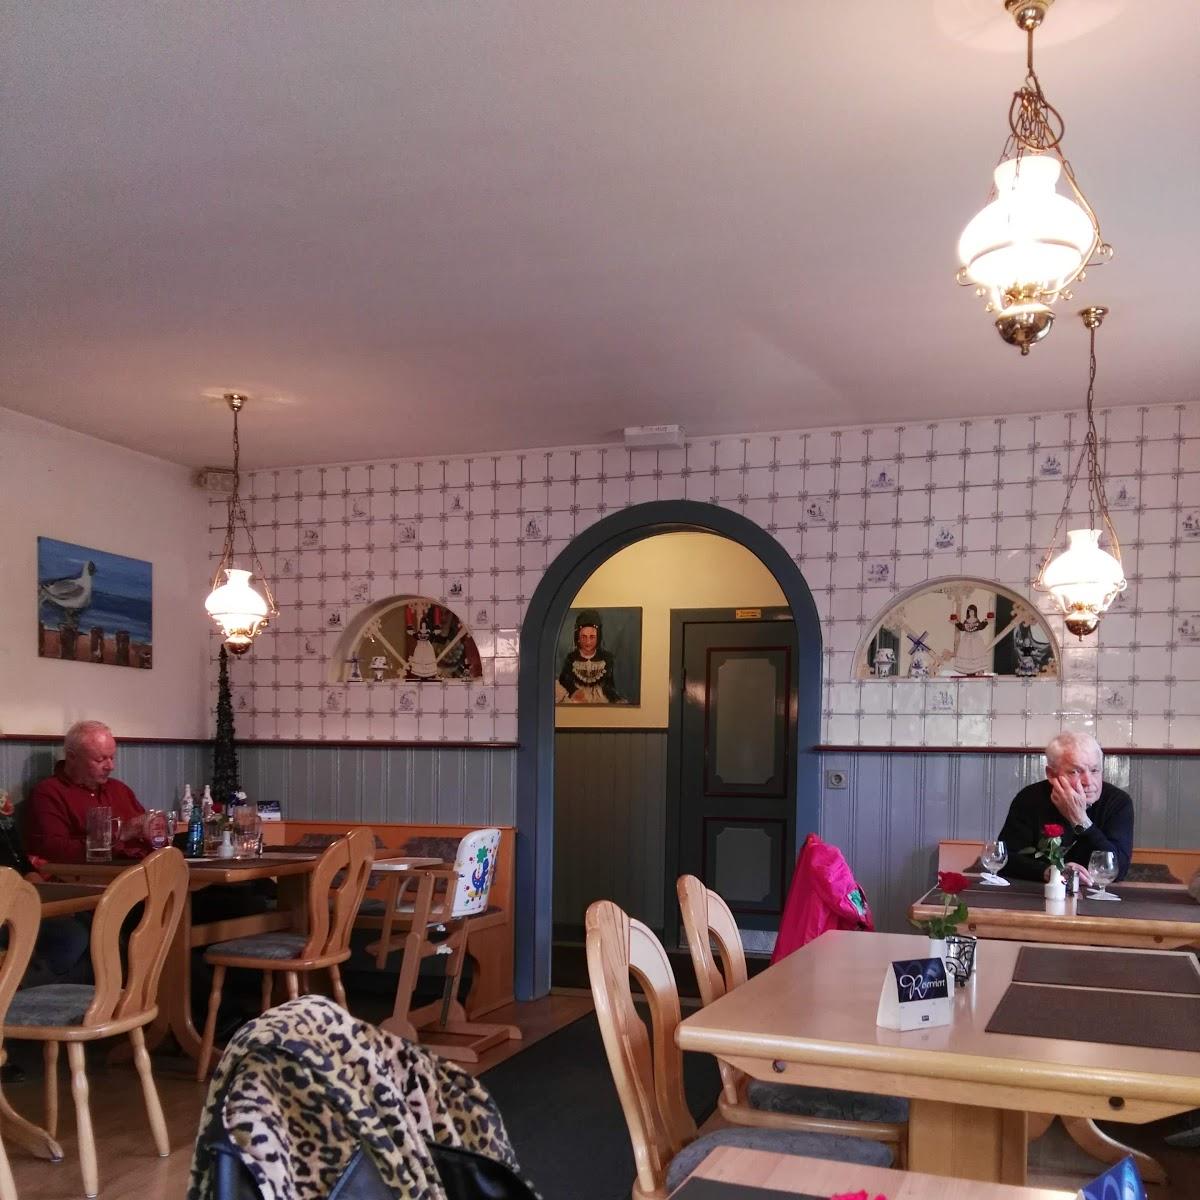 Restaurant "Ual fering Wiartshüs" in  Oldsum